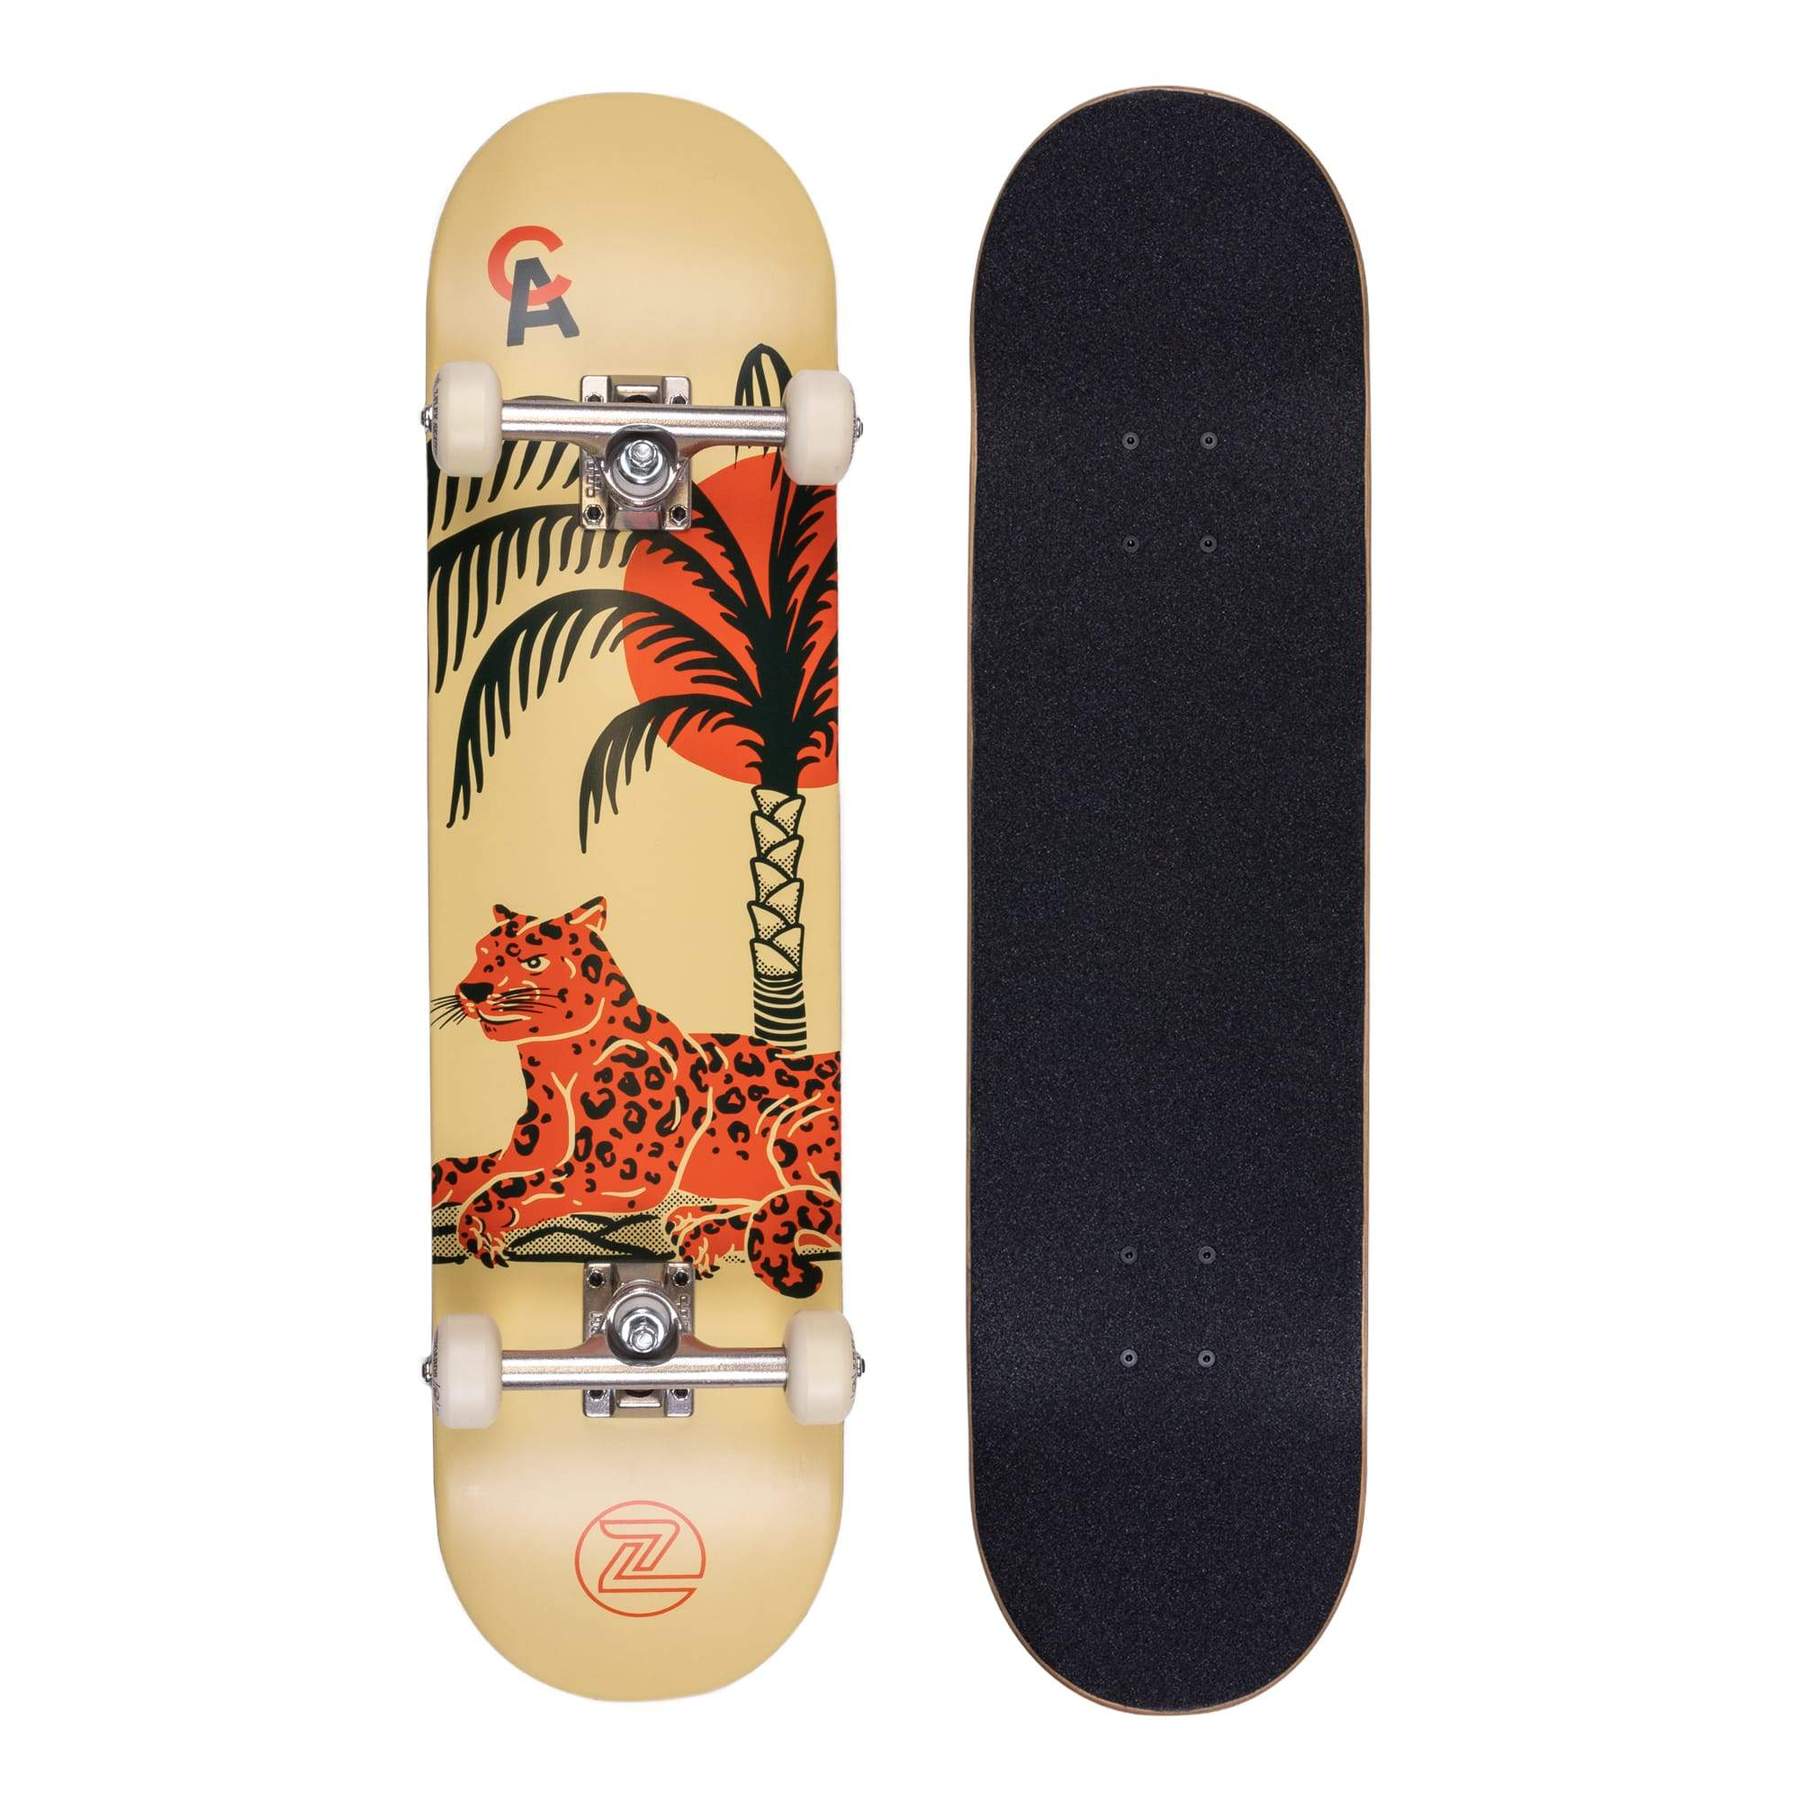 ZFlex Aragon Palm Complete Skateboard - 8.0